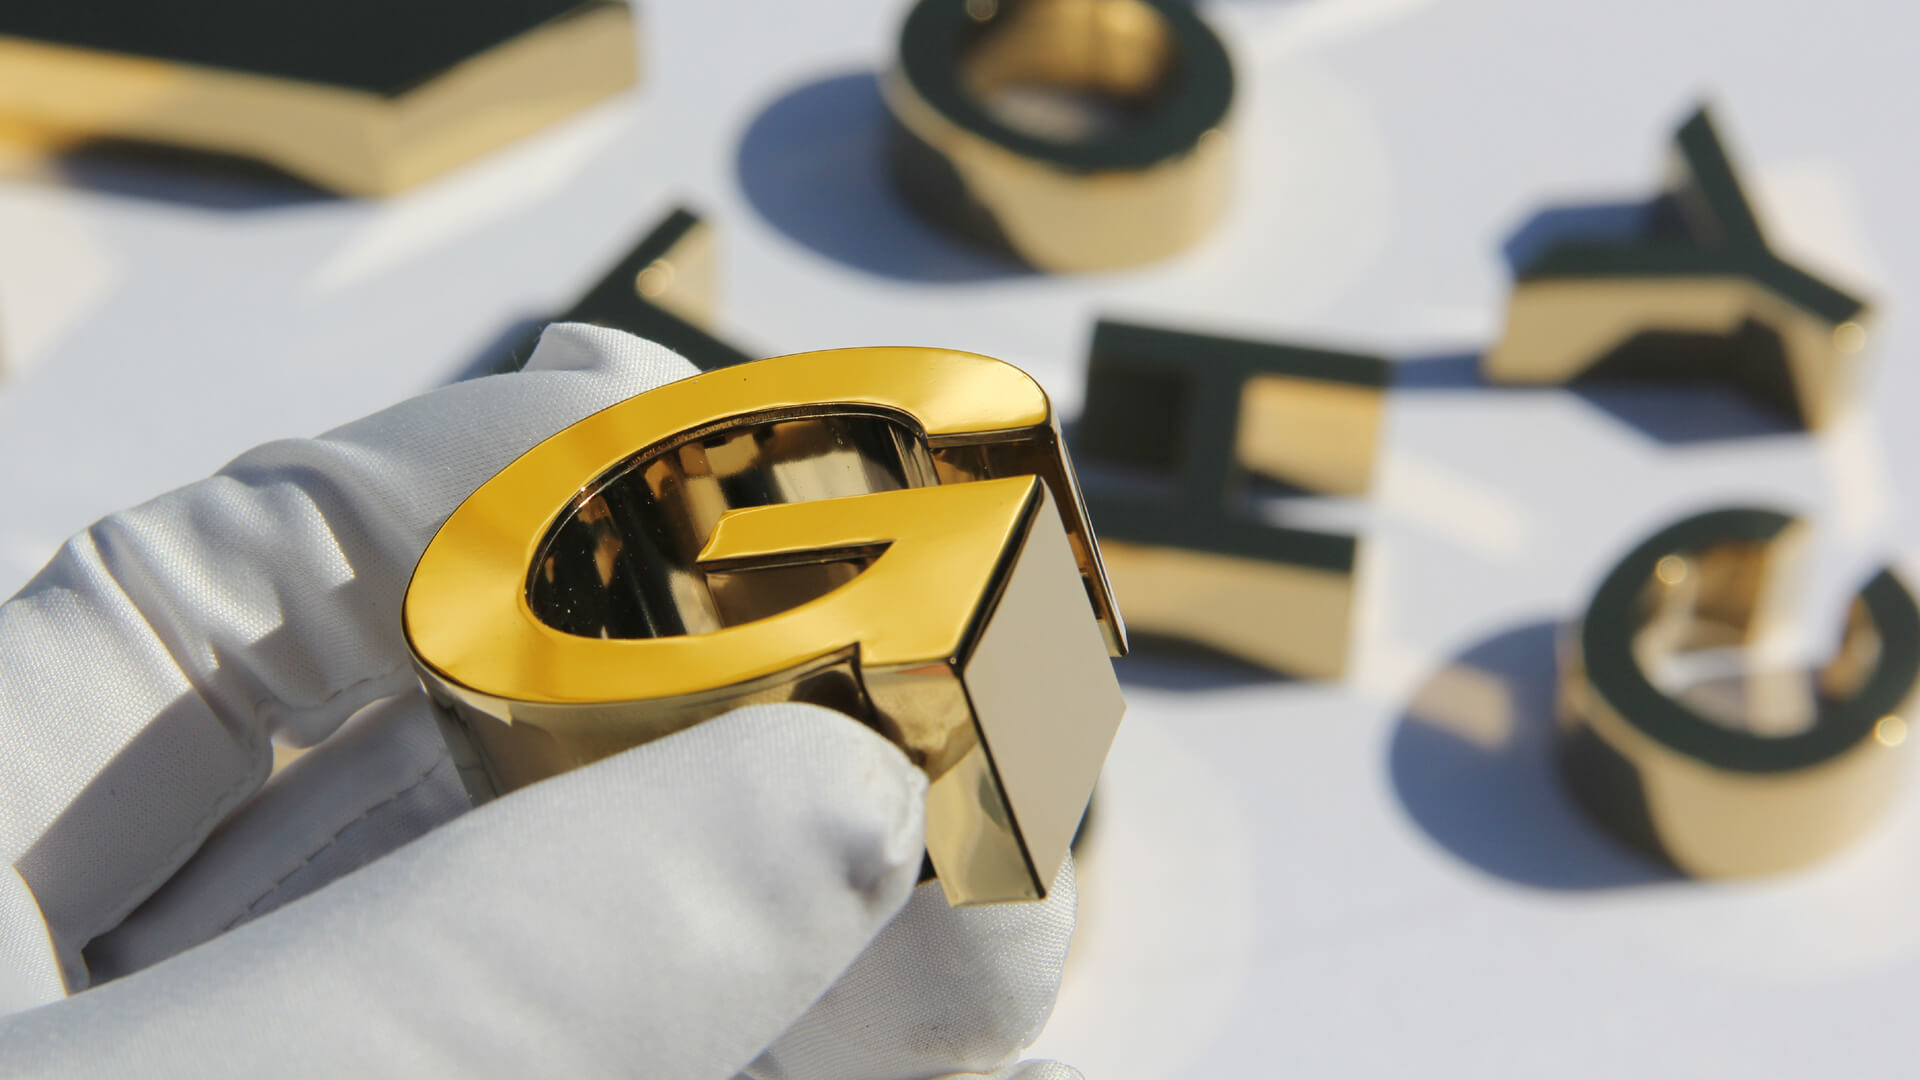 Lettre G - en acier inoxydable, poli à l'or